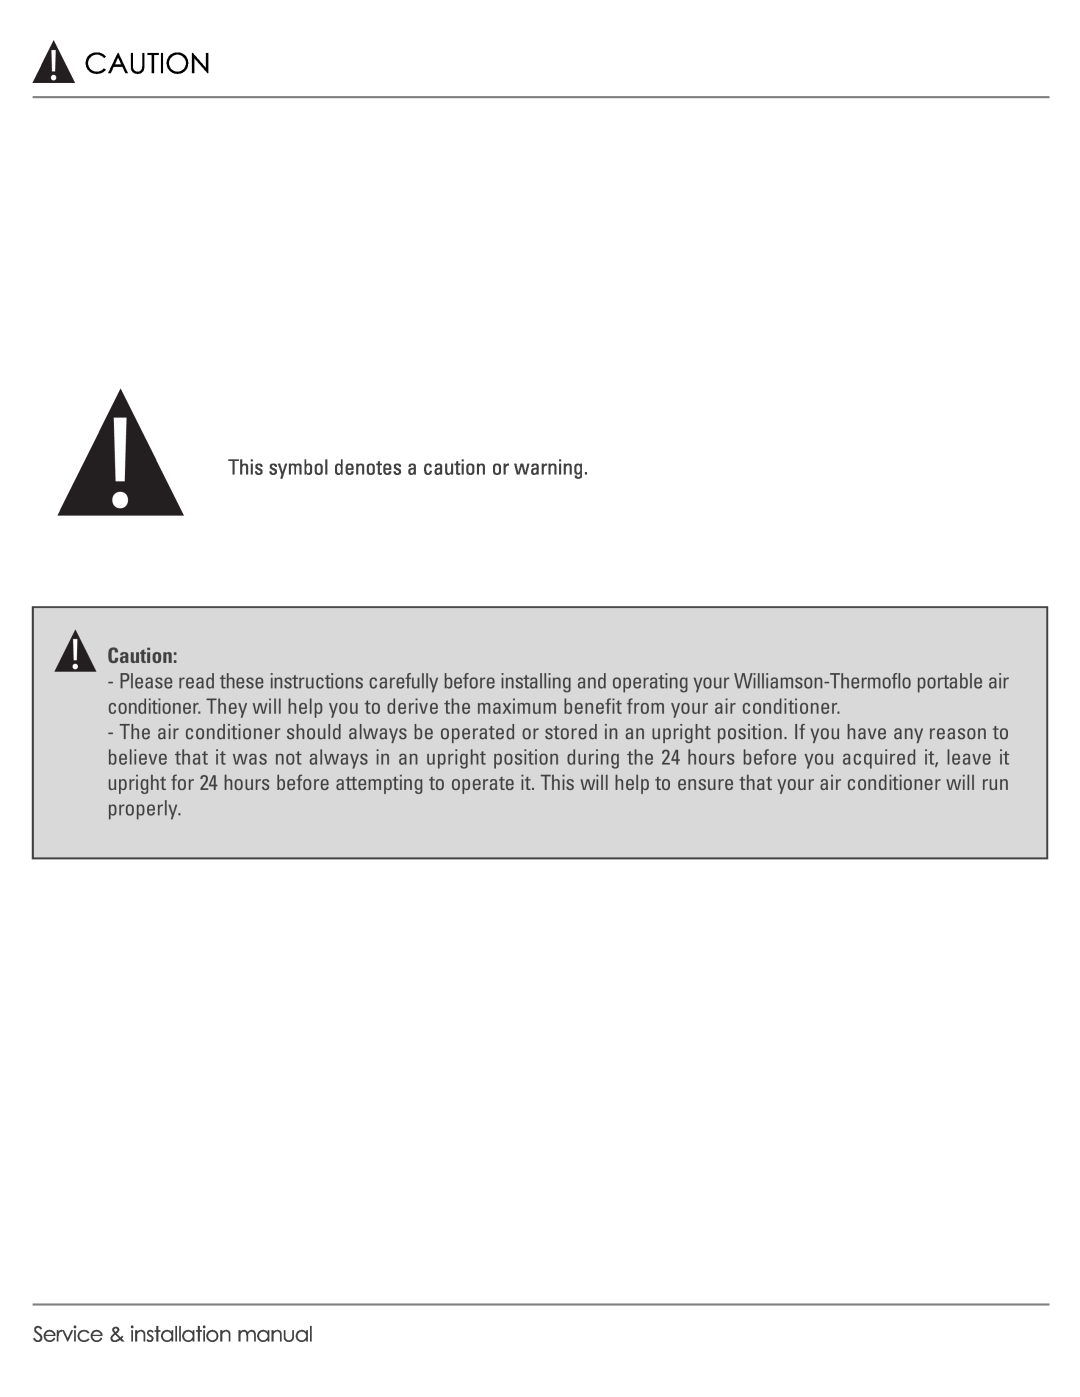 Alpine 12PRA Service & installation manual, This symbol denotes a caution or warning 